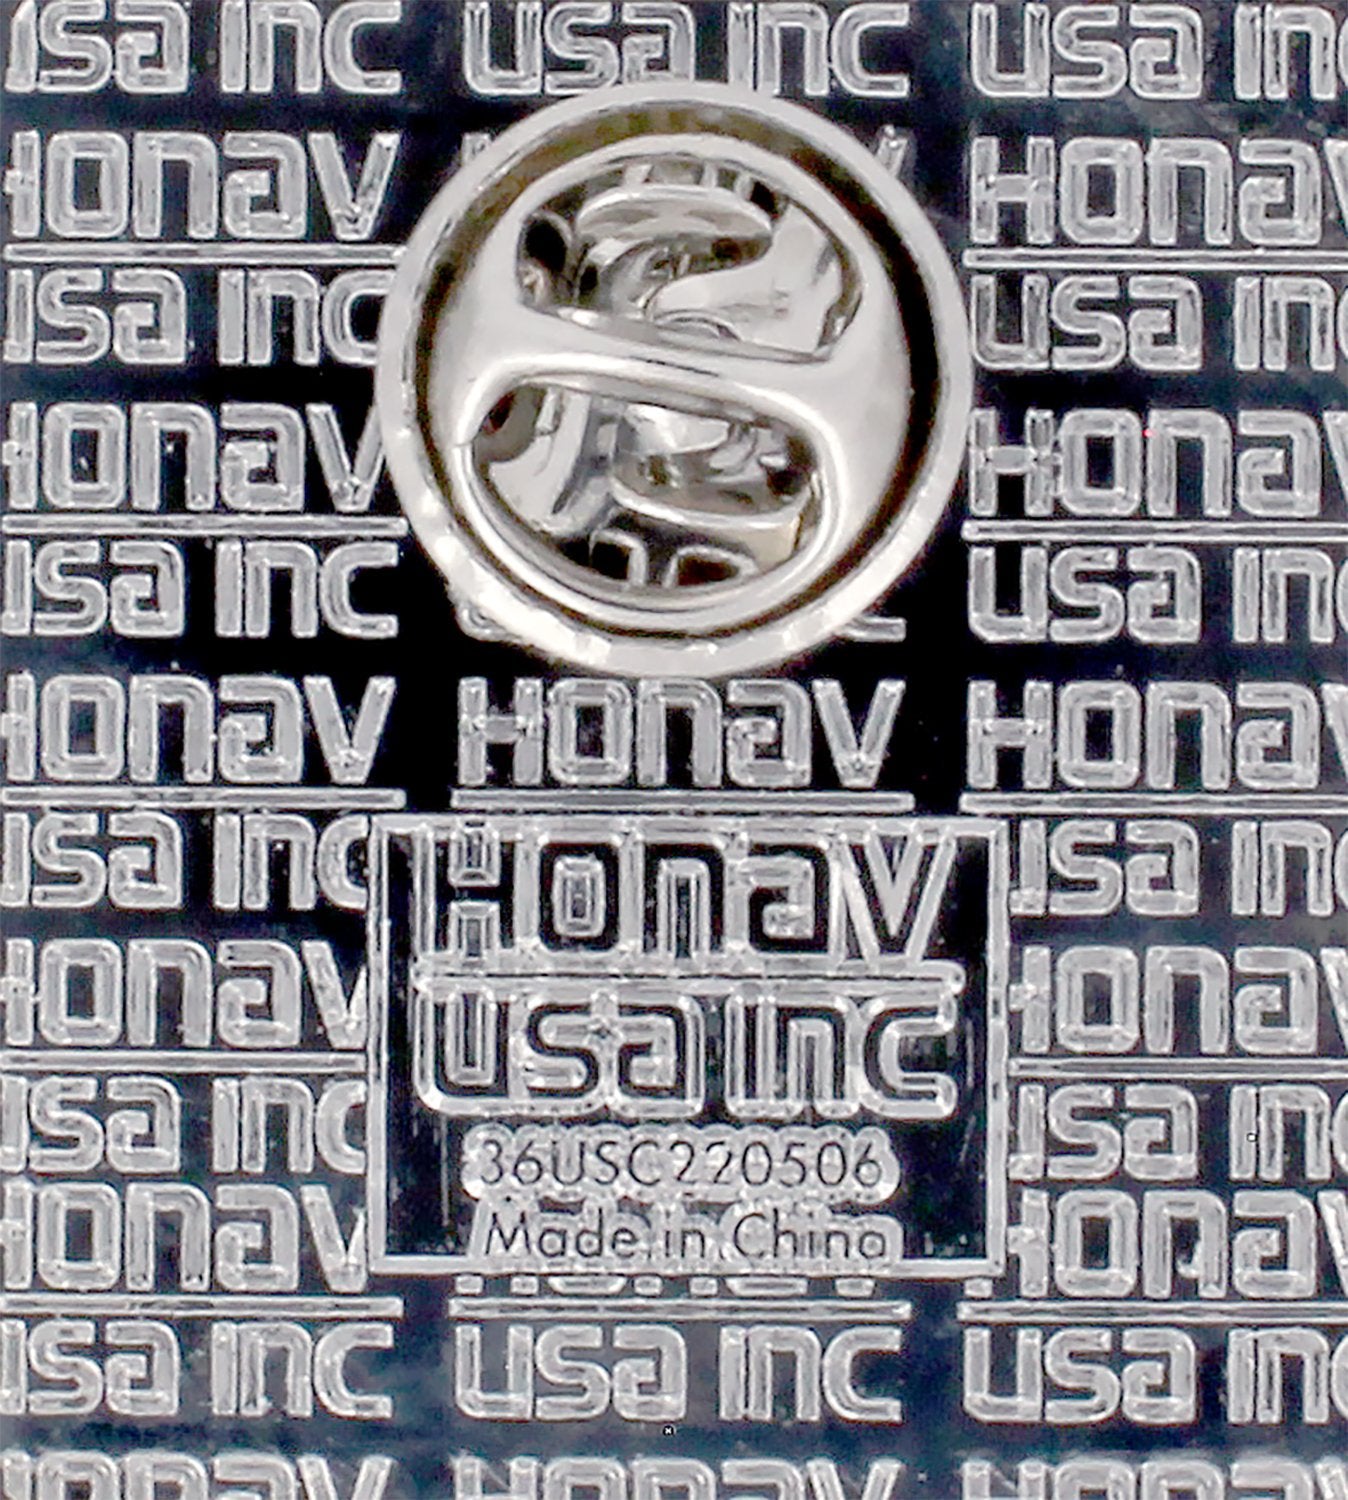 Team USA x Hello Kitty Classic Pin